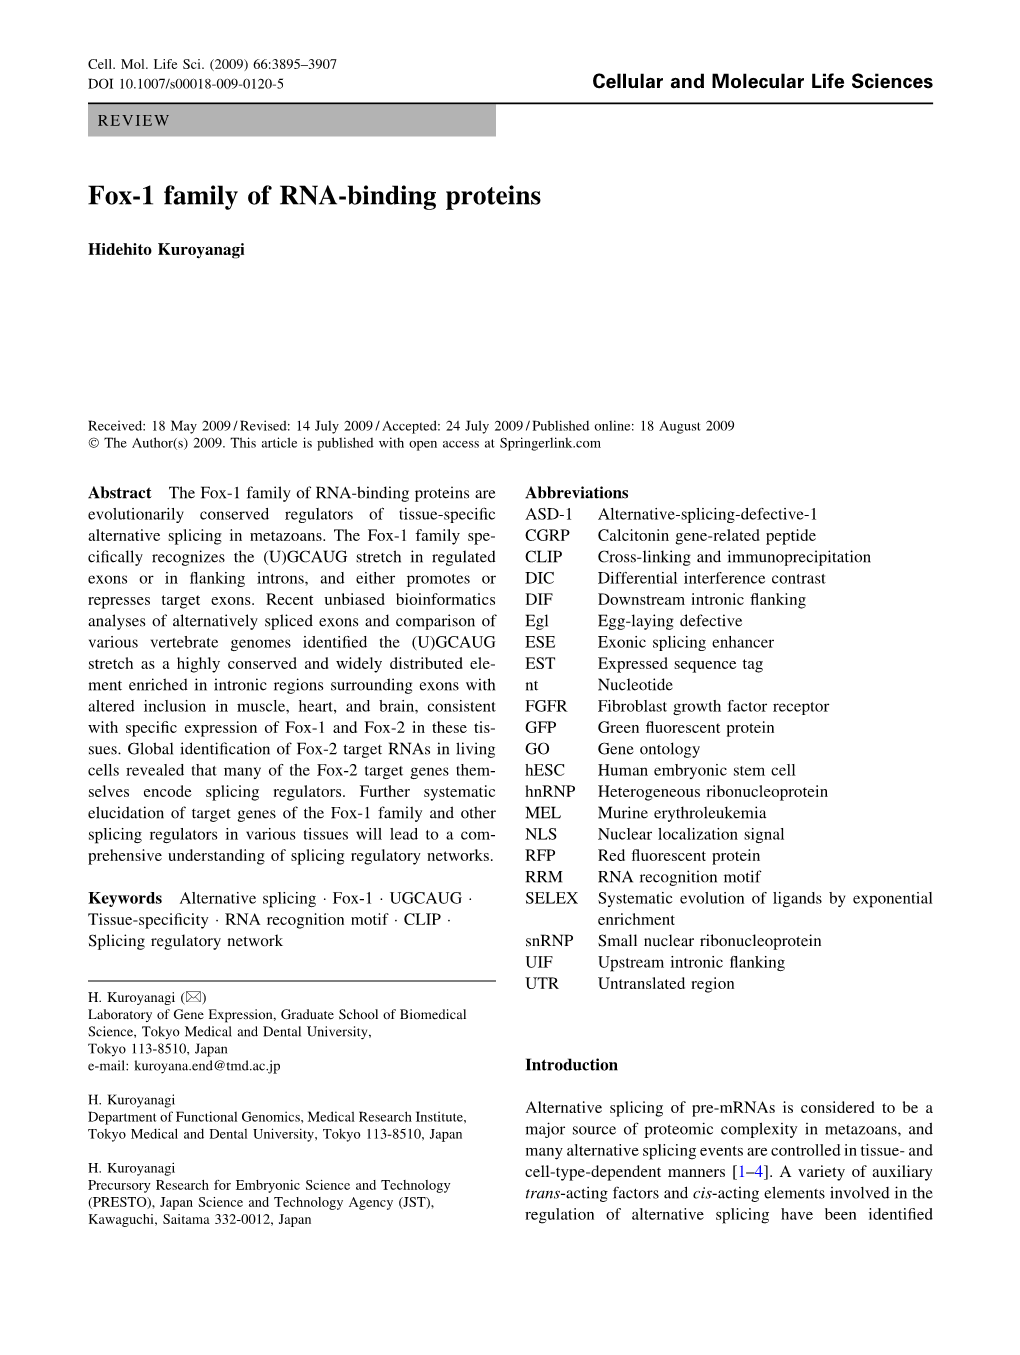 Fox-1 Family of RNA-Binding Proteins